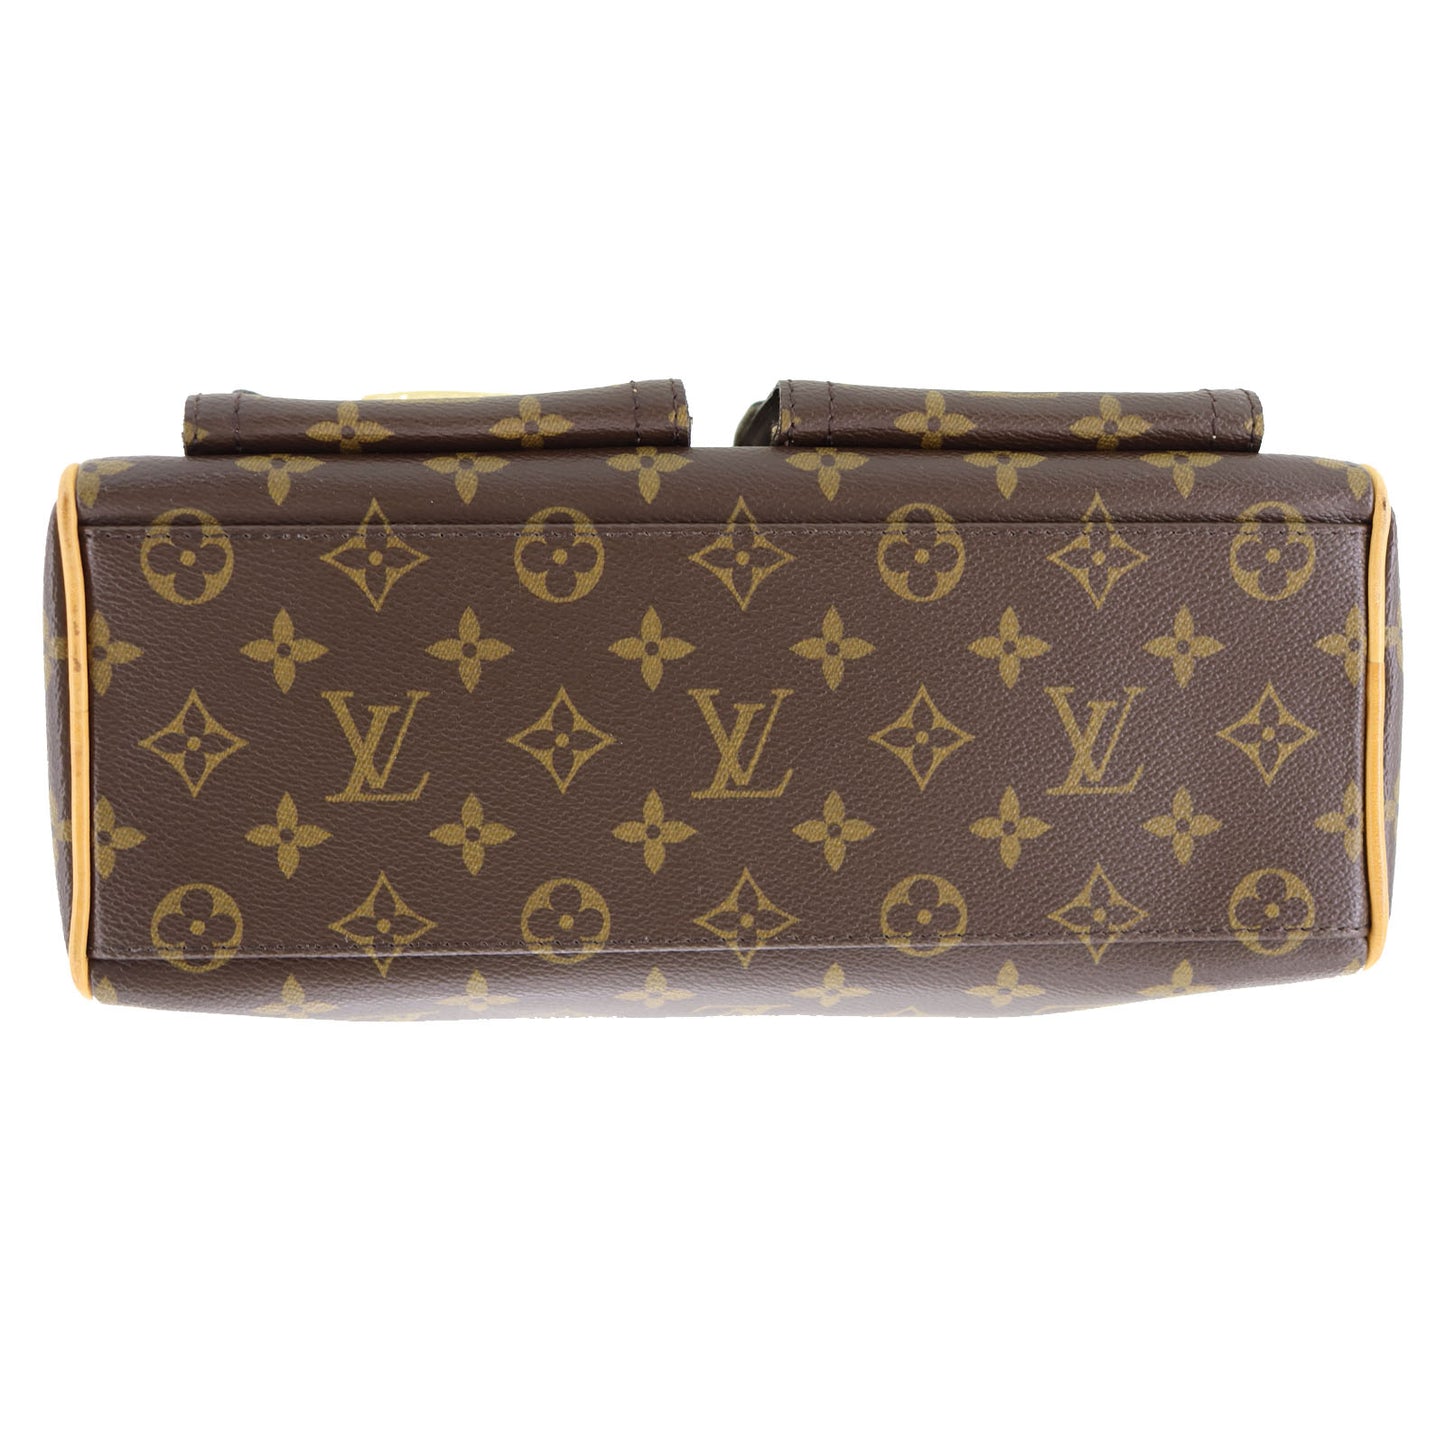 Buy Louis Vuitton monogram LOUIS VUITTON Manhattan PM Monogram M40026  Handbag Brown / 350442 [Used] from Japan - Buy authentic Plus exclusive  items from Japan